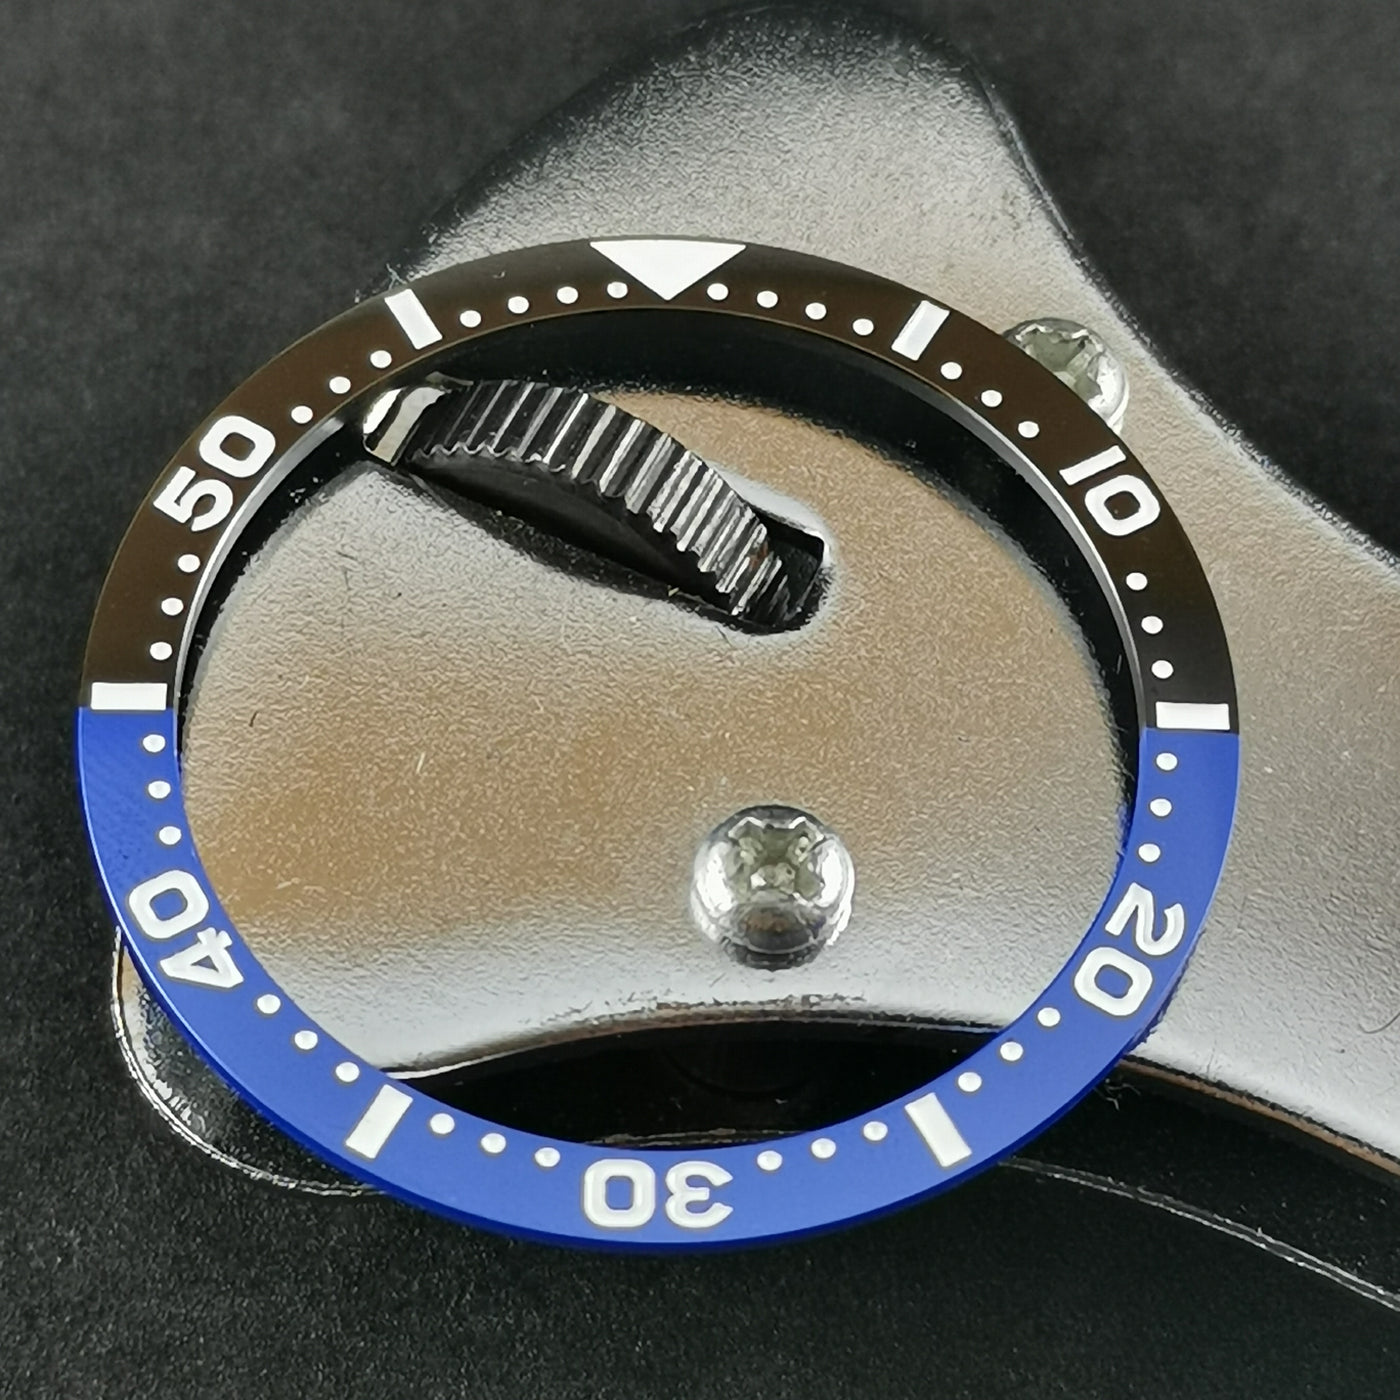 SKX007 Flat Ceramic Bezel Insert - Batman SKX Style - Watch&Style